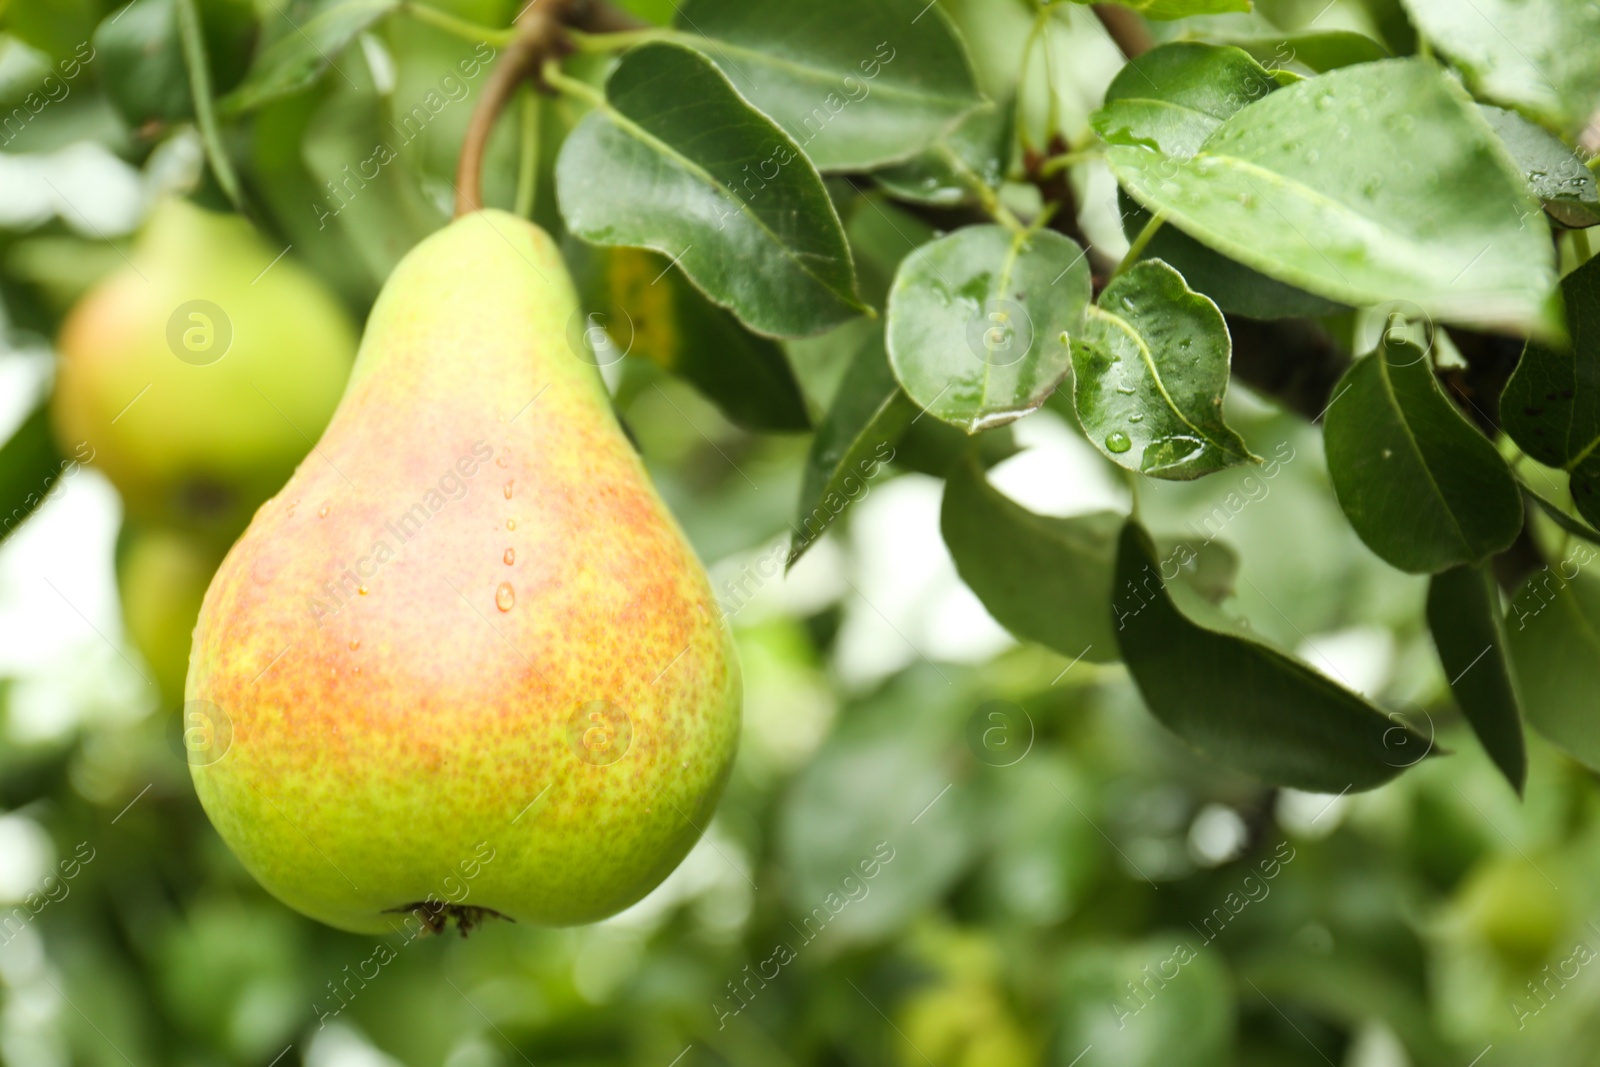 Photo of Ripe pear on tree branch in garden, closeup